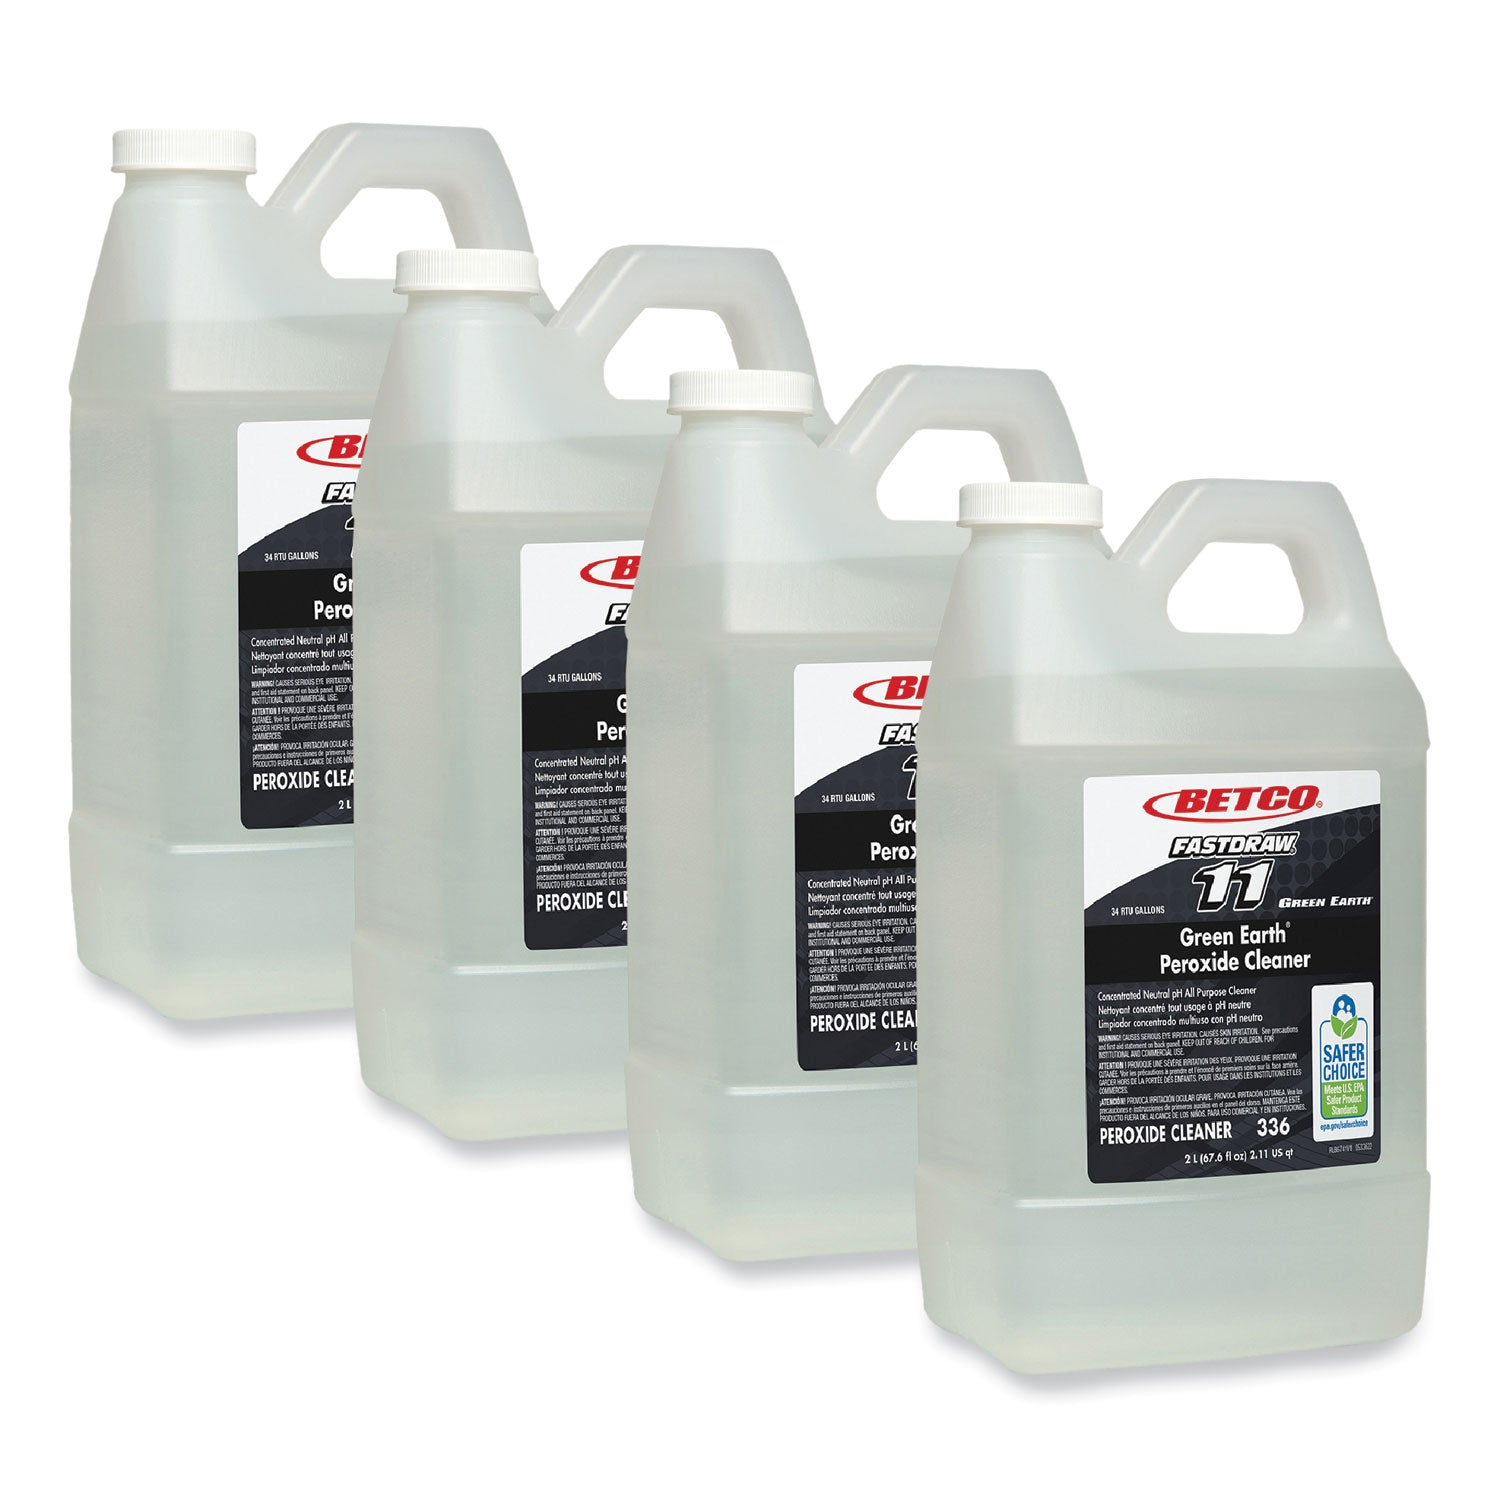 green-earth-peroxide-cleaner-fresh-mint-scent-2-l-bottle-4-carton_bet3364700 - 8